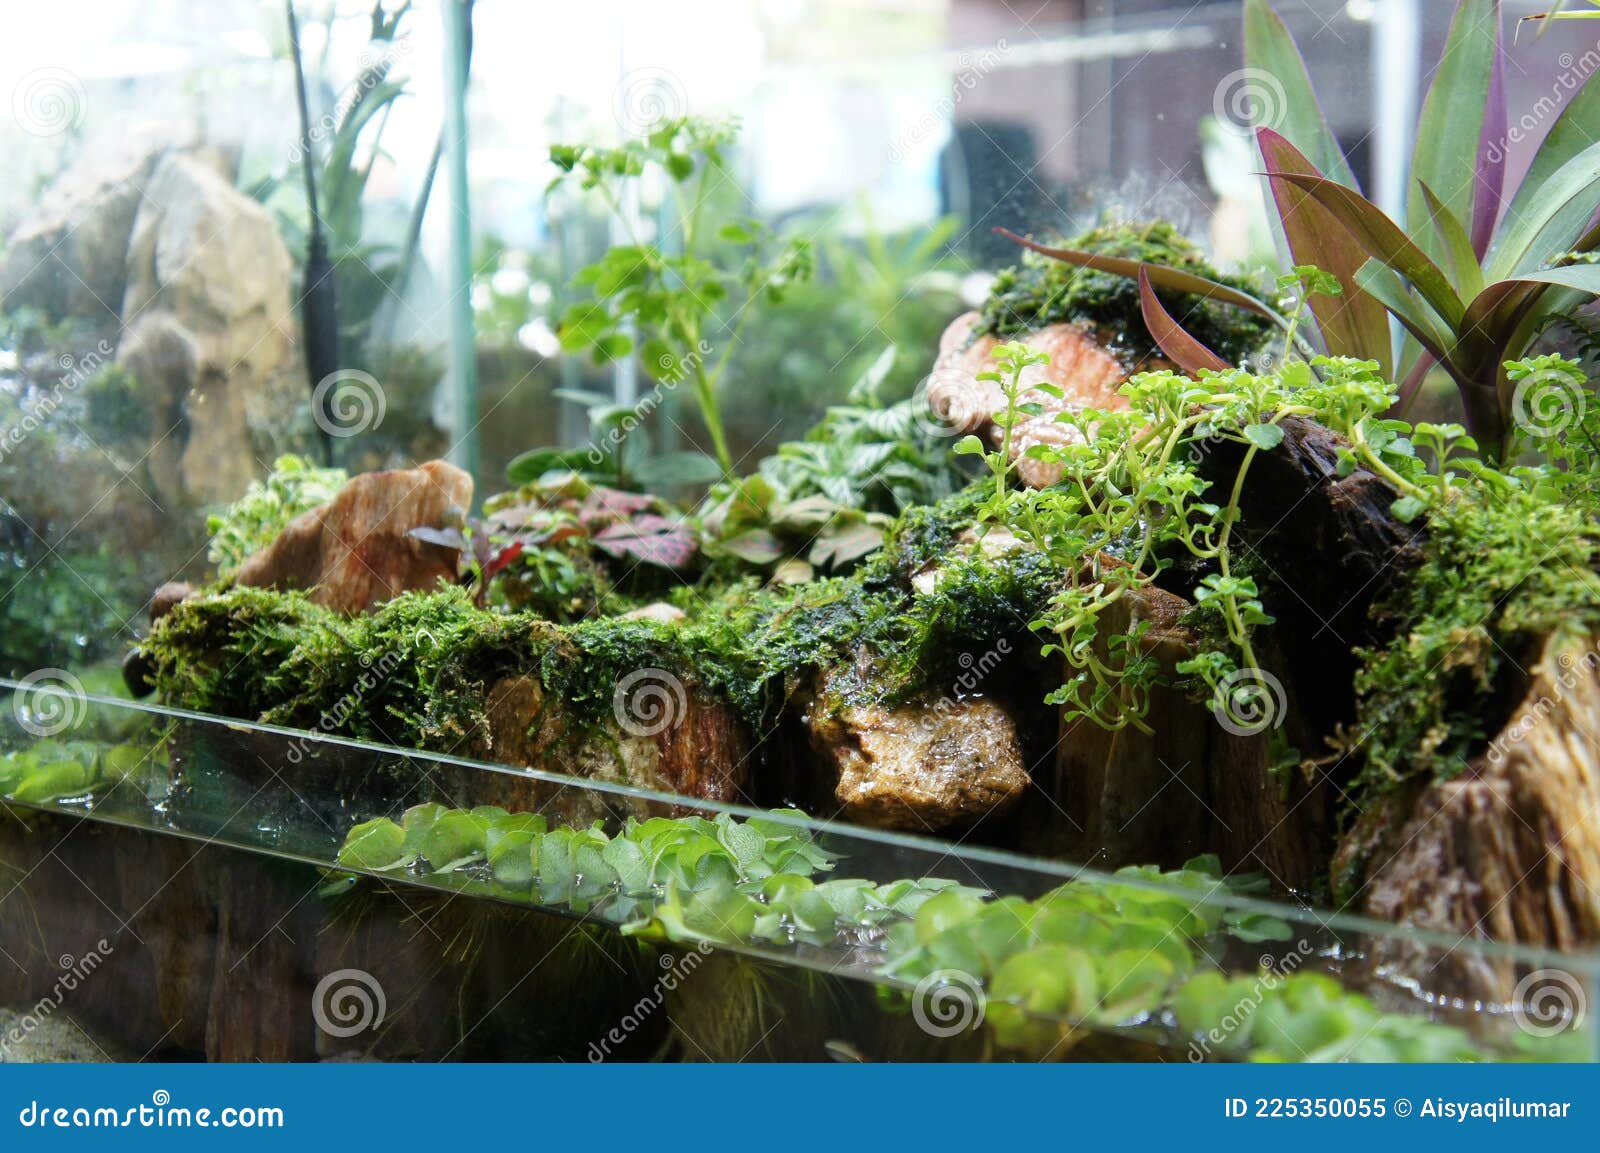 Selected of Aquascape and Terrarium Design in Small Glass Aquarium Stock Image - Image of display, decoration: 225350055